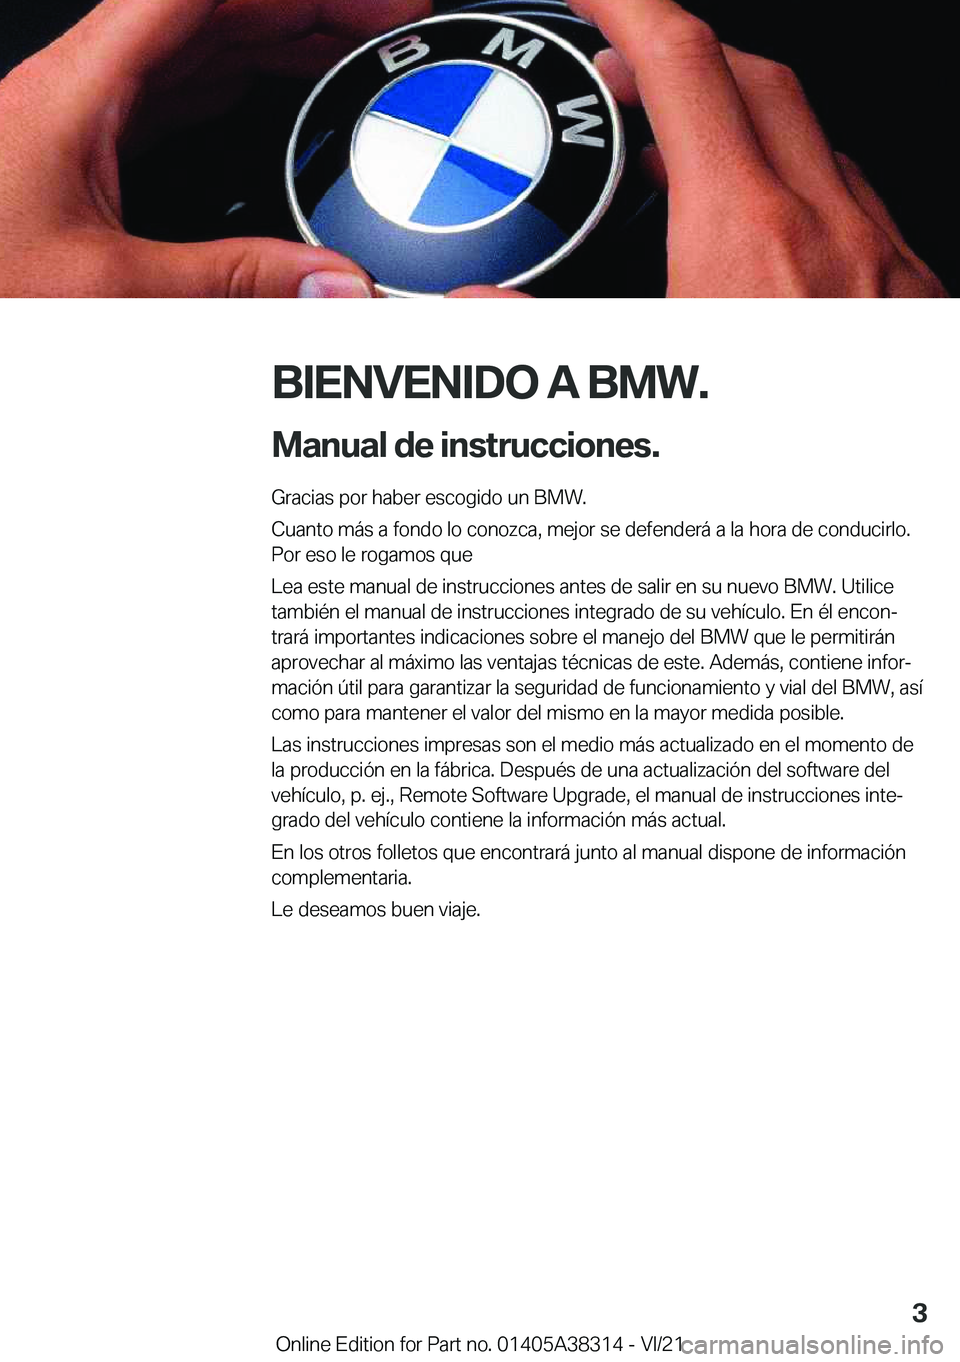 BMW 2 SERIES GRAN COUPE 2022  Manuales de Empleo (in Spanish) �B�I�E�N�V�E�N�I�D�O��A��B�M�W�.
�M�a�n�u�a�l��d�e��i�n�s�t�r�u�c�c�i�o�n�e�s�. �G�r�a�c�i�a�s��p�o�r��h�a�b�e�r��e�s�c�o�g�i�d�o��u�n��B�M�W�.
�C�u�a�n�t�o��m�